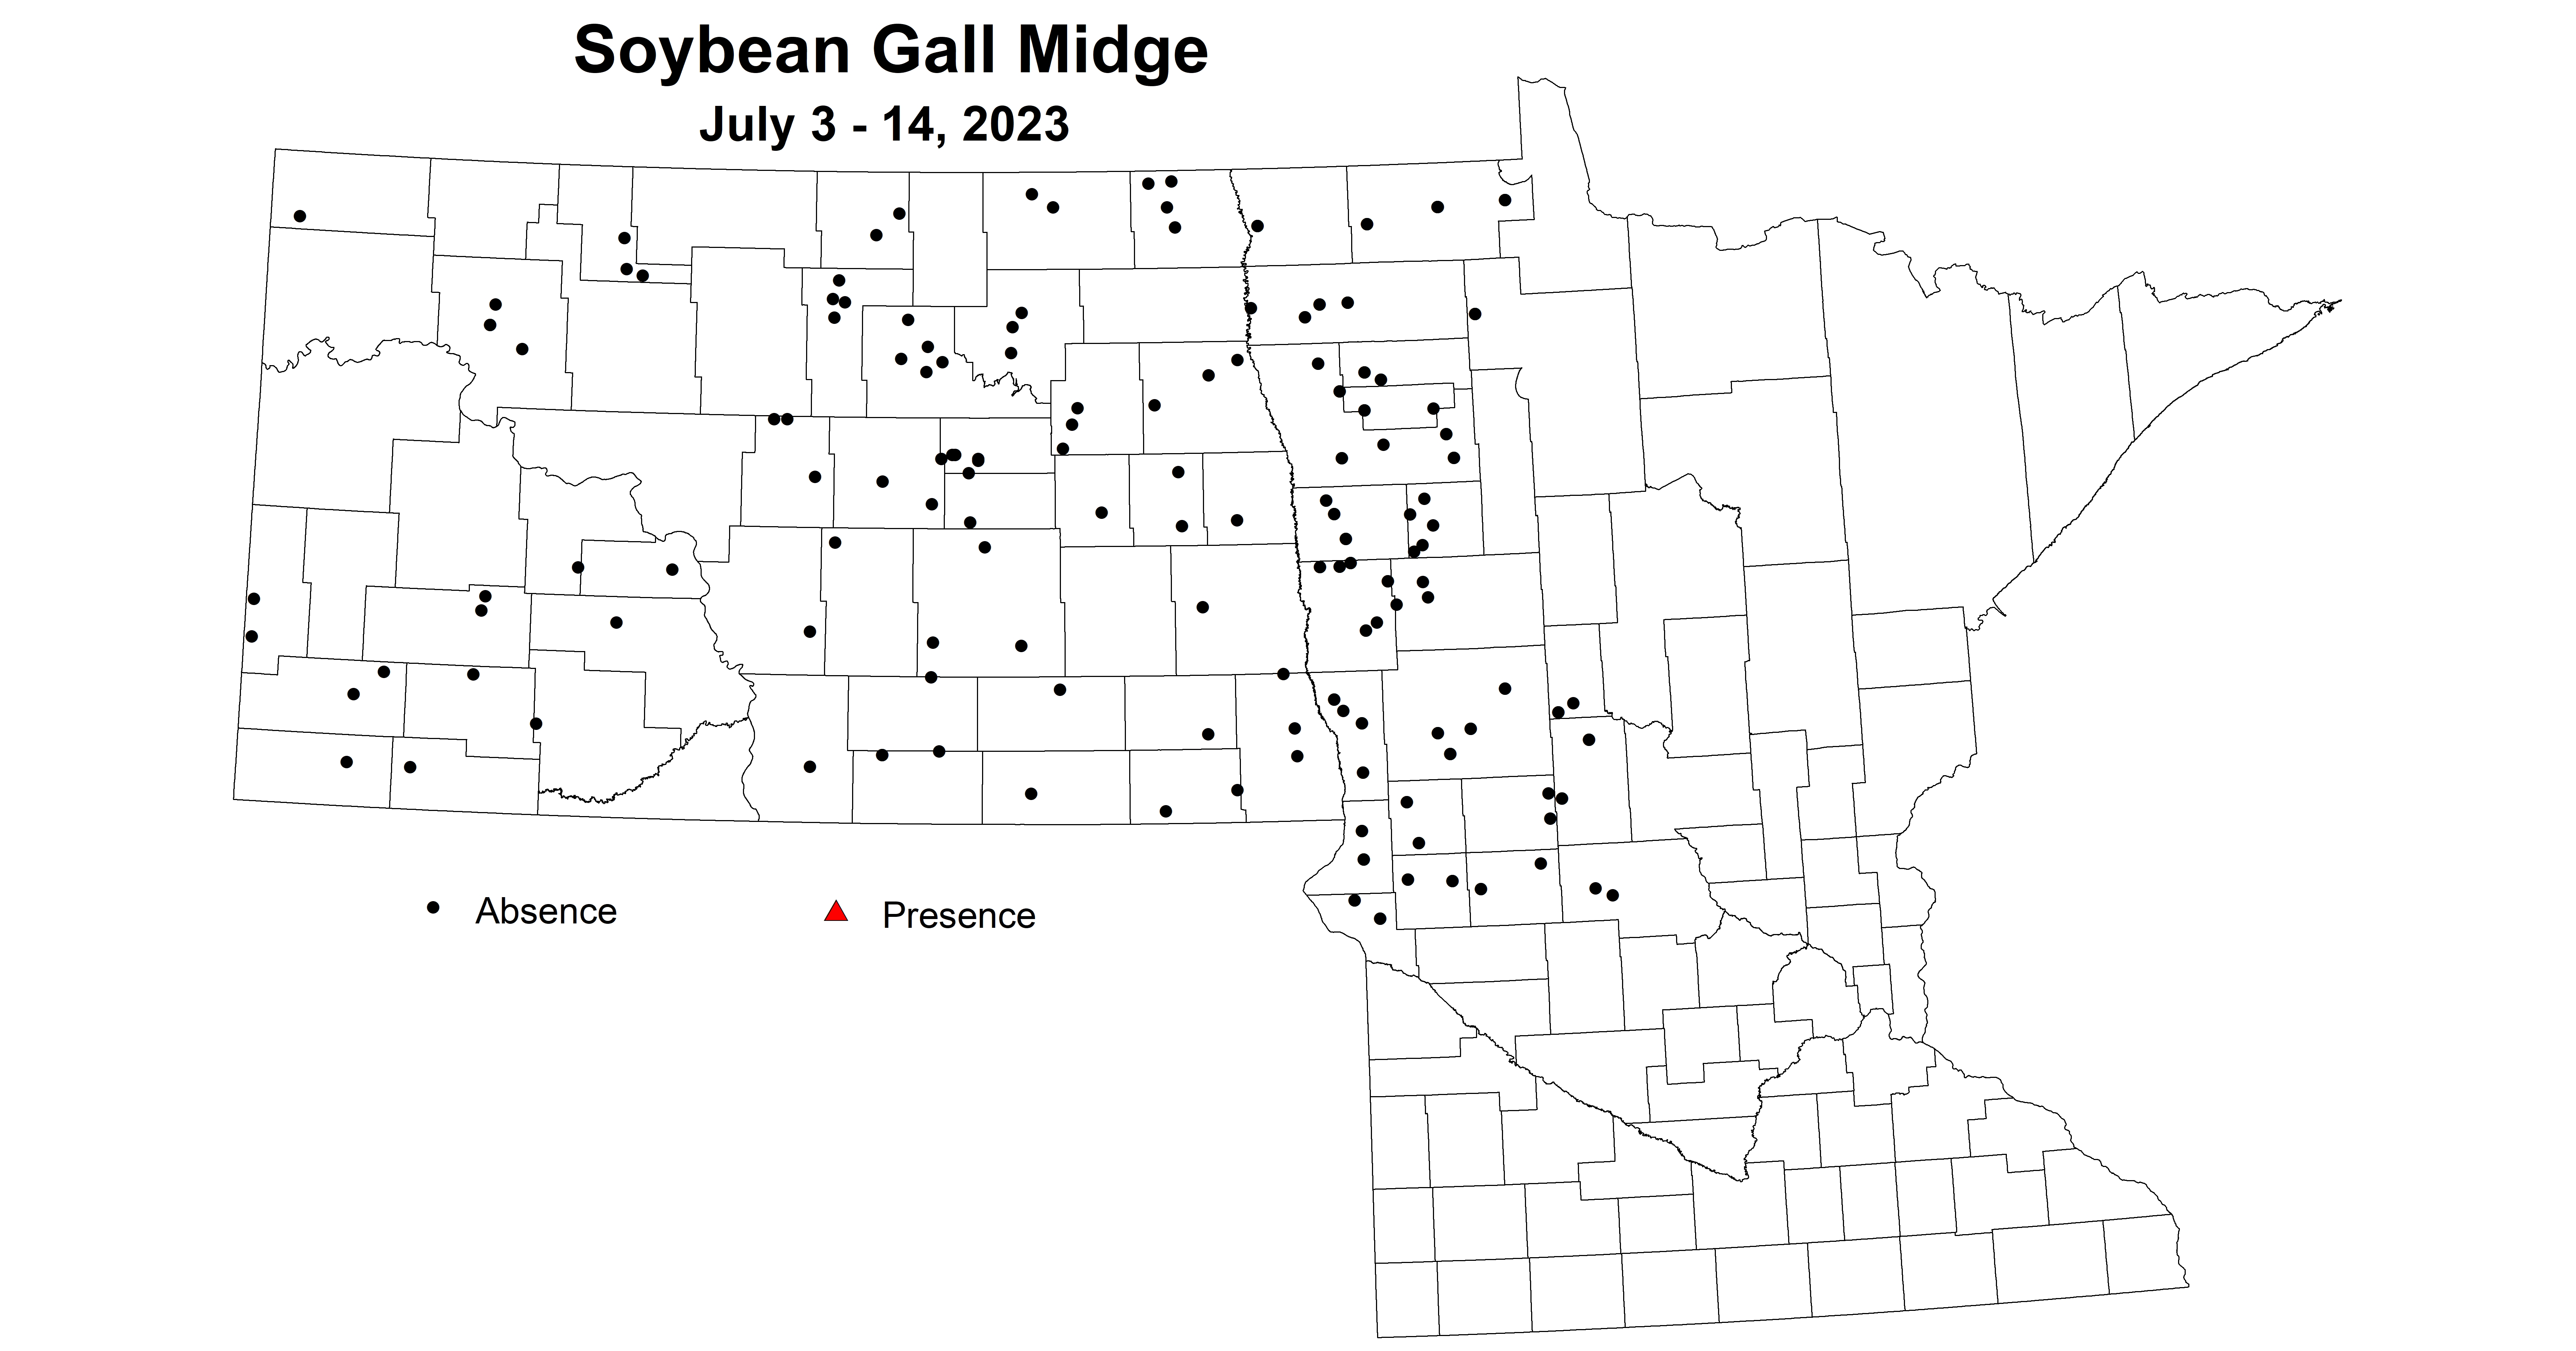 soybean gall midge July 3-14 2023